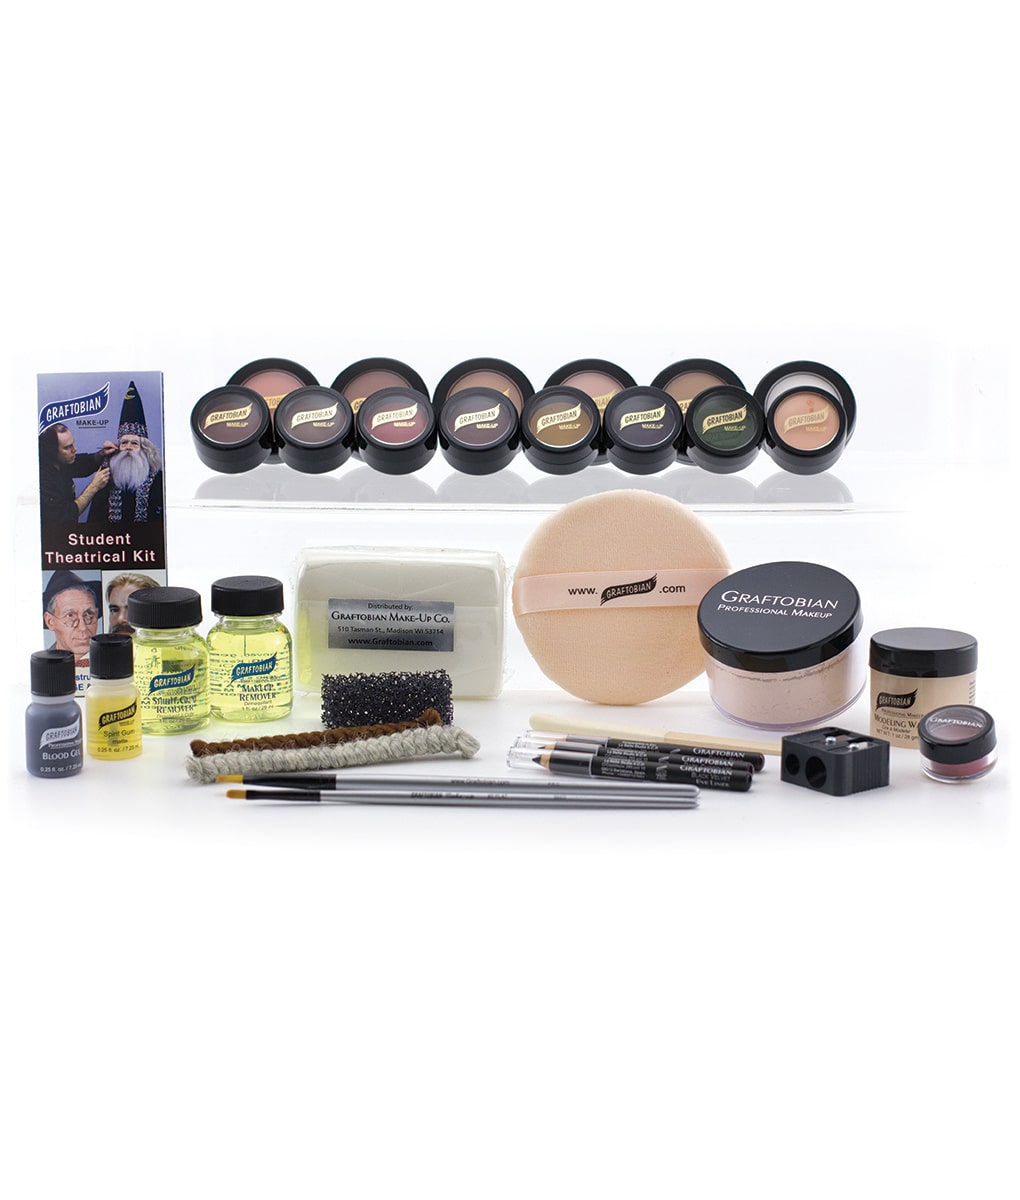 Fan Brush Makeup  Graftobian Professional Makeup – Graftobian Make-Up  Company